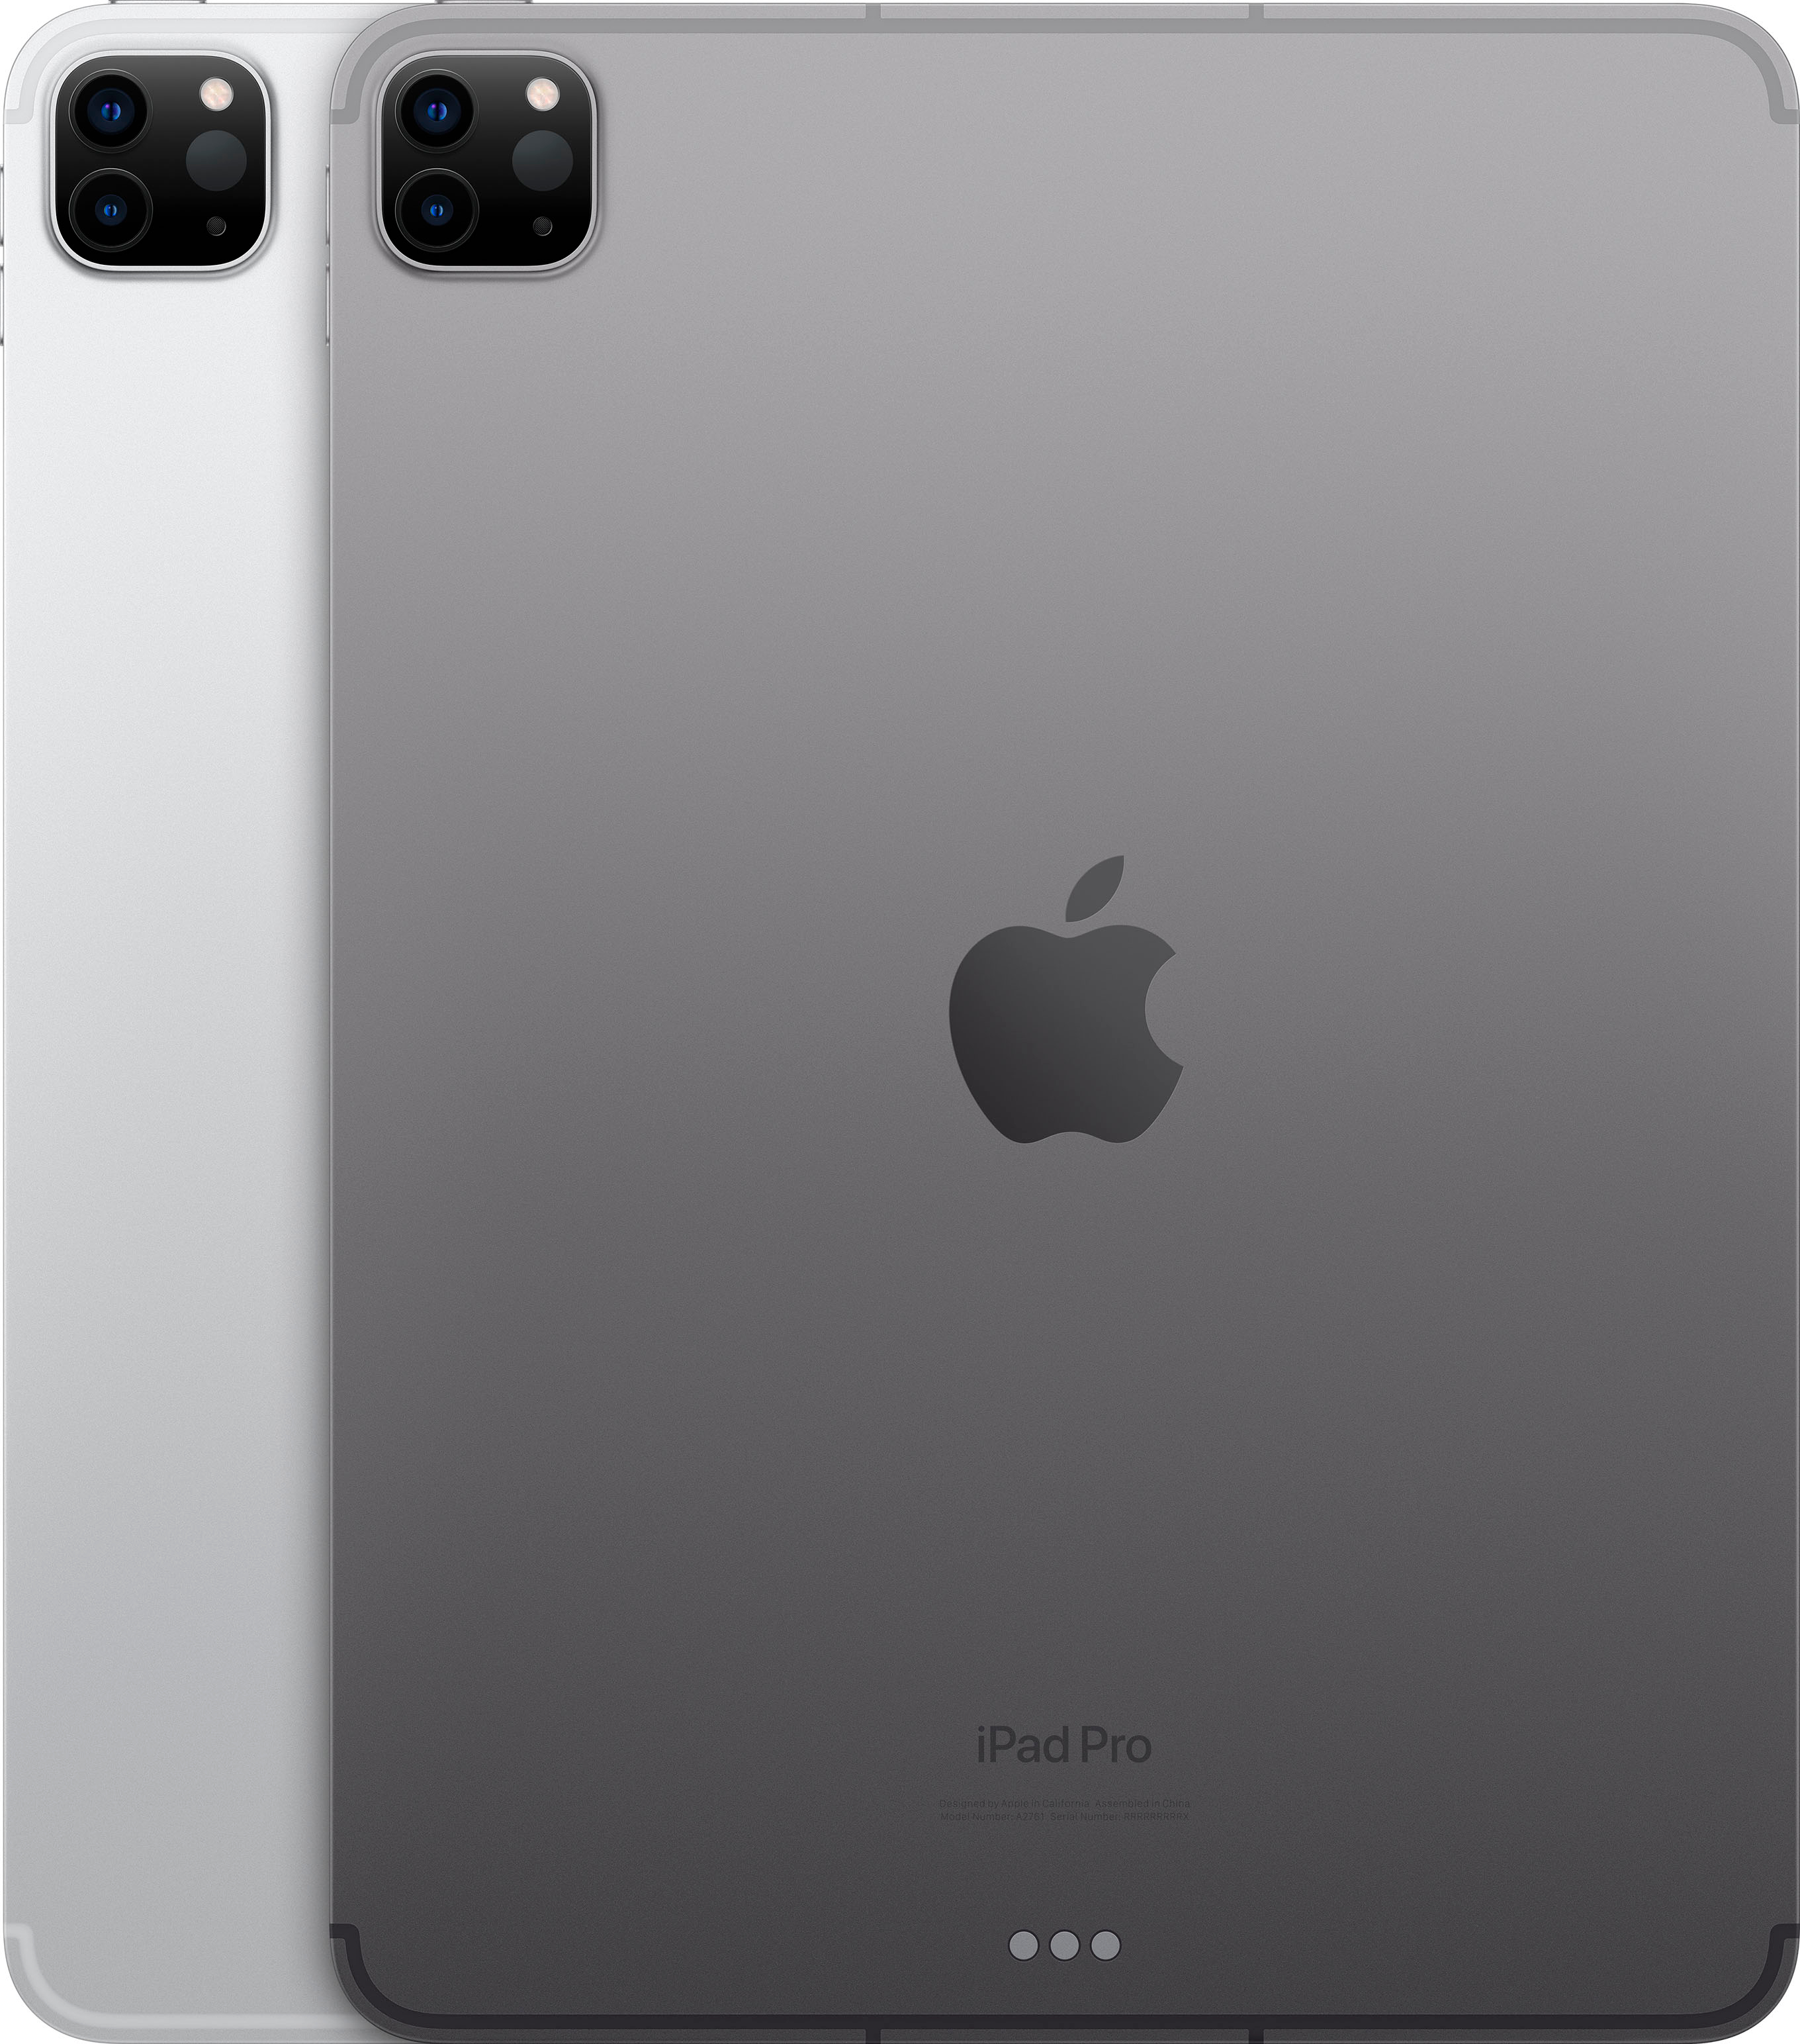 Apple 11-Inch iPad Pro (Latest Model) with Wi-Fi + Cellular 256GB